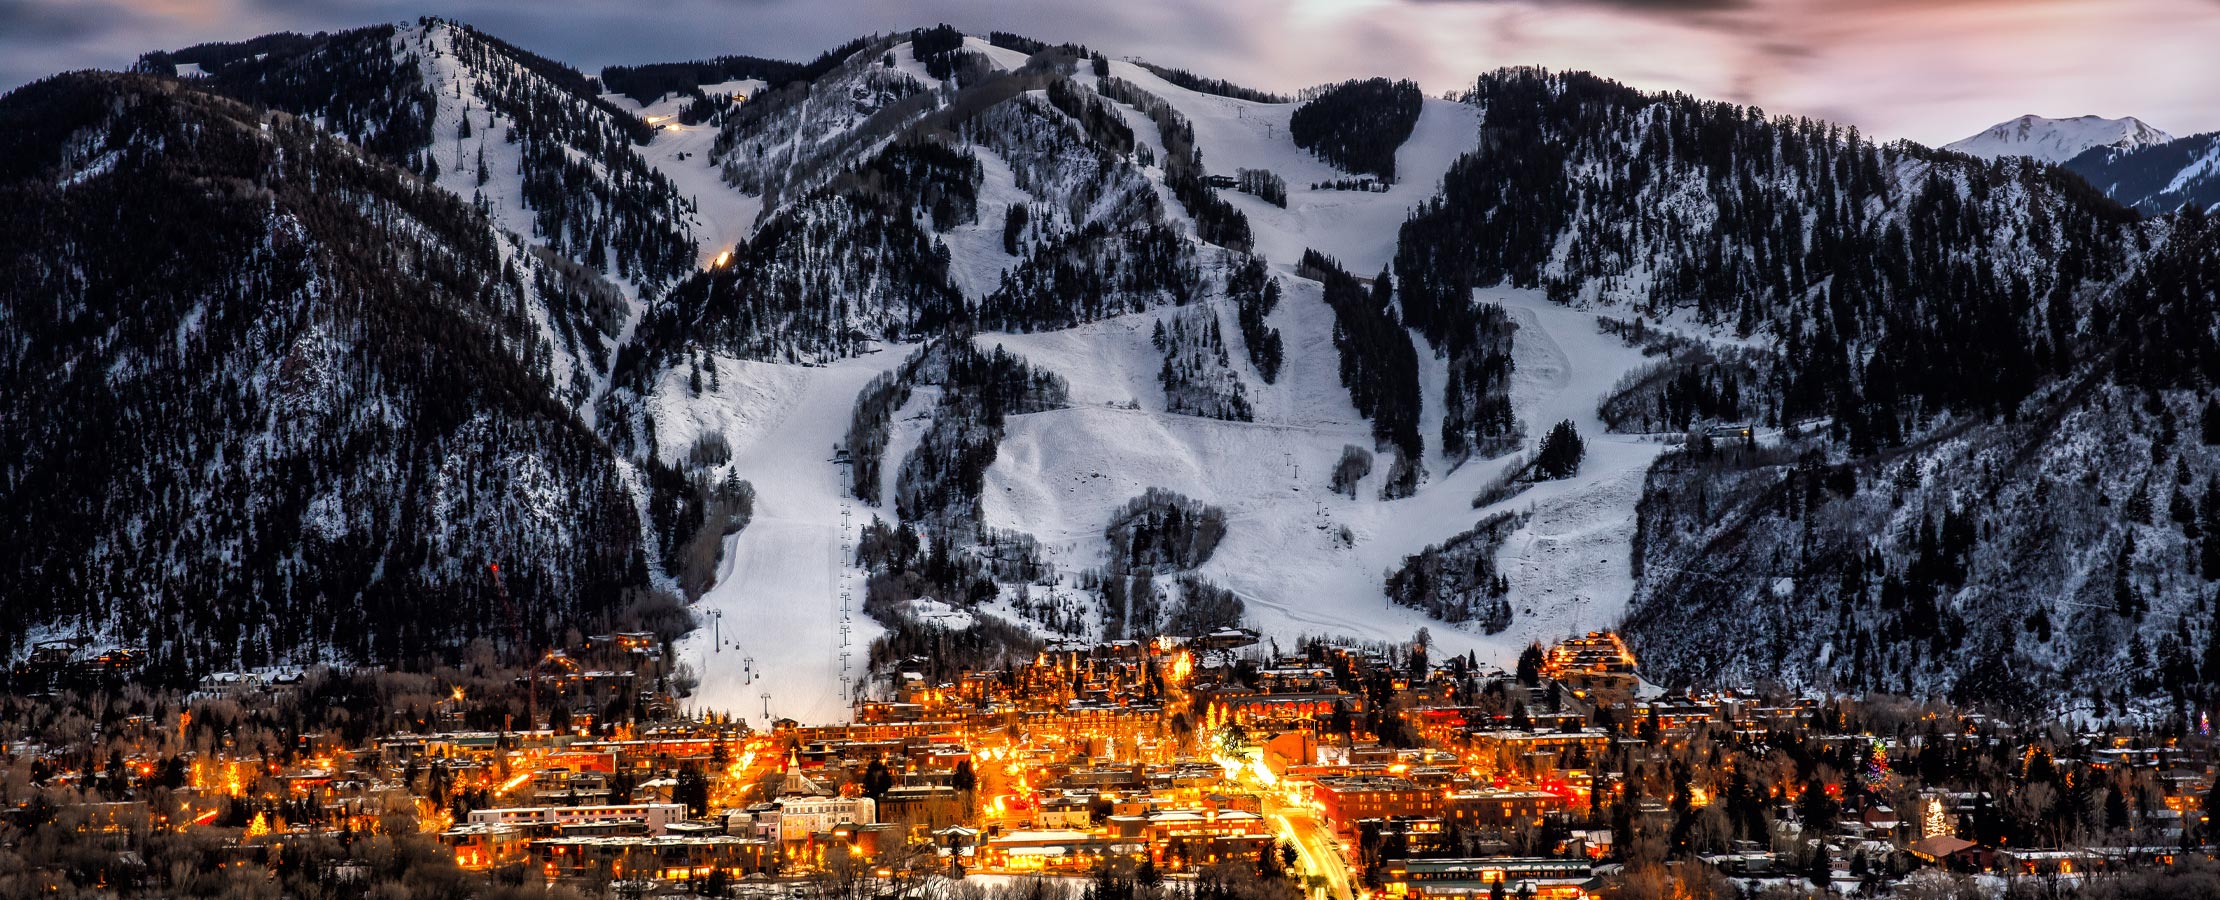 Colorado Ski Resort Methane 50